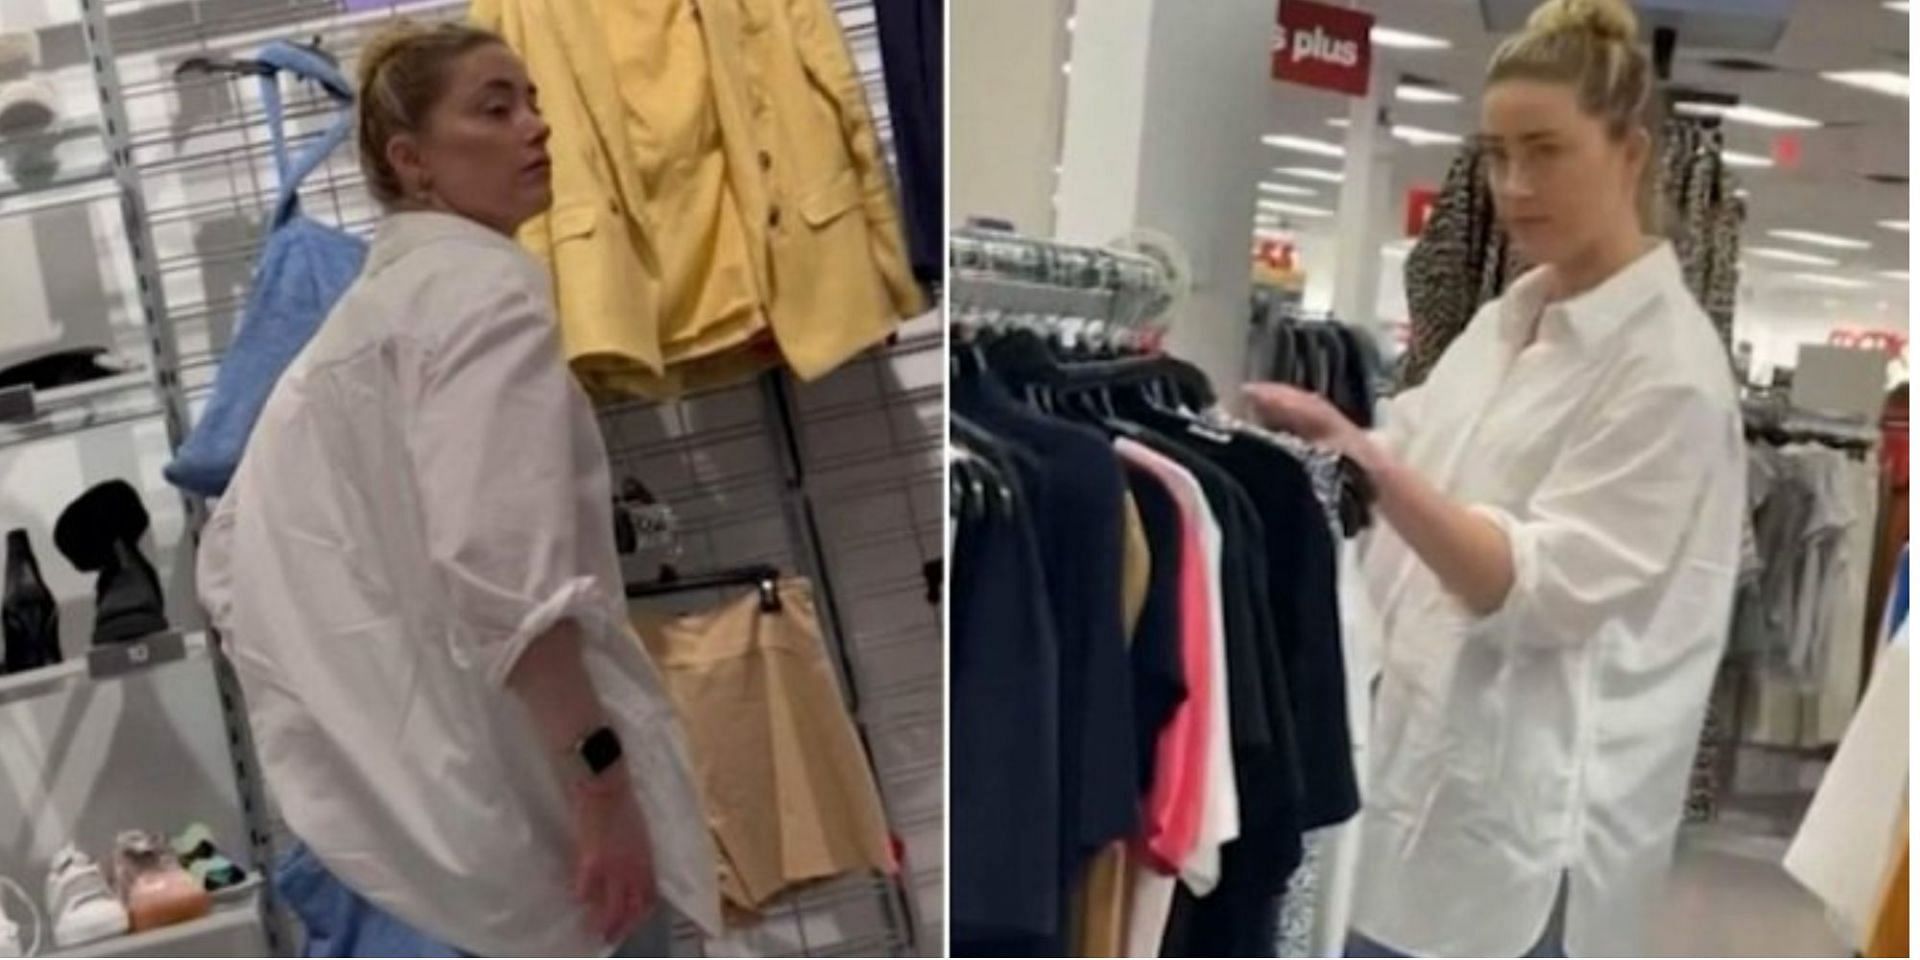 Broke' Amber Heard spotted shopping at TJ Maxx